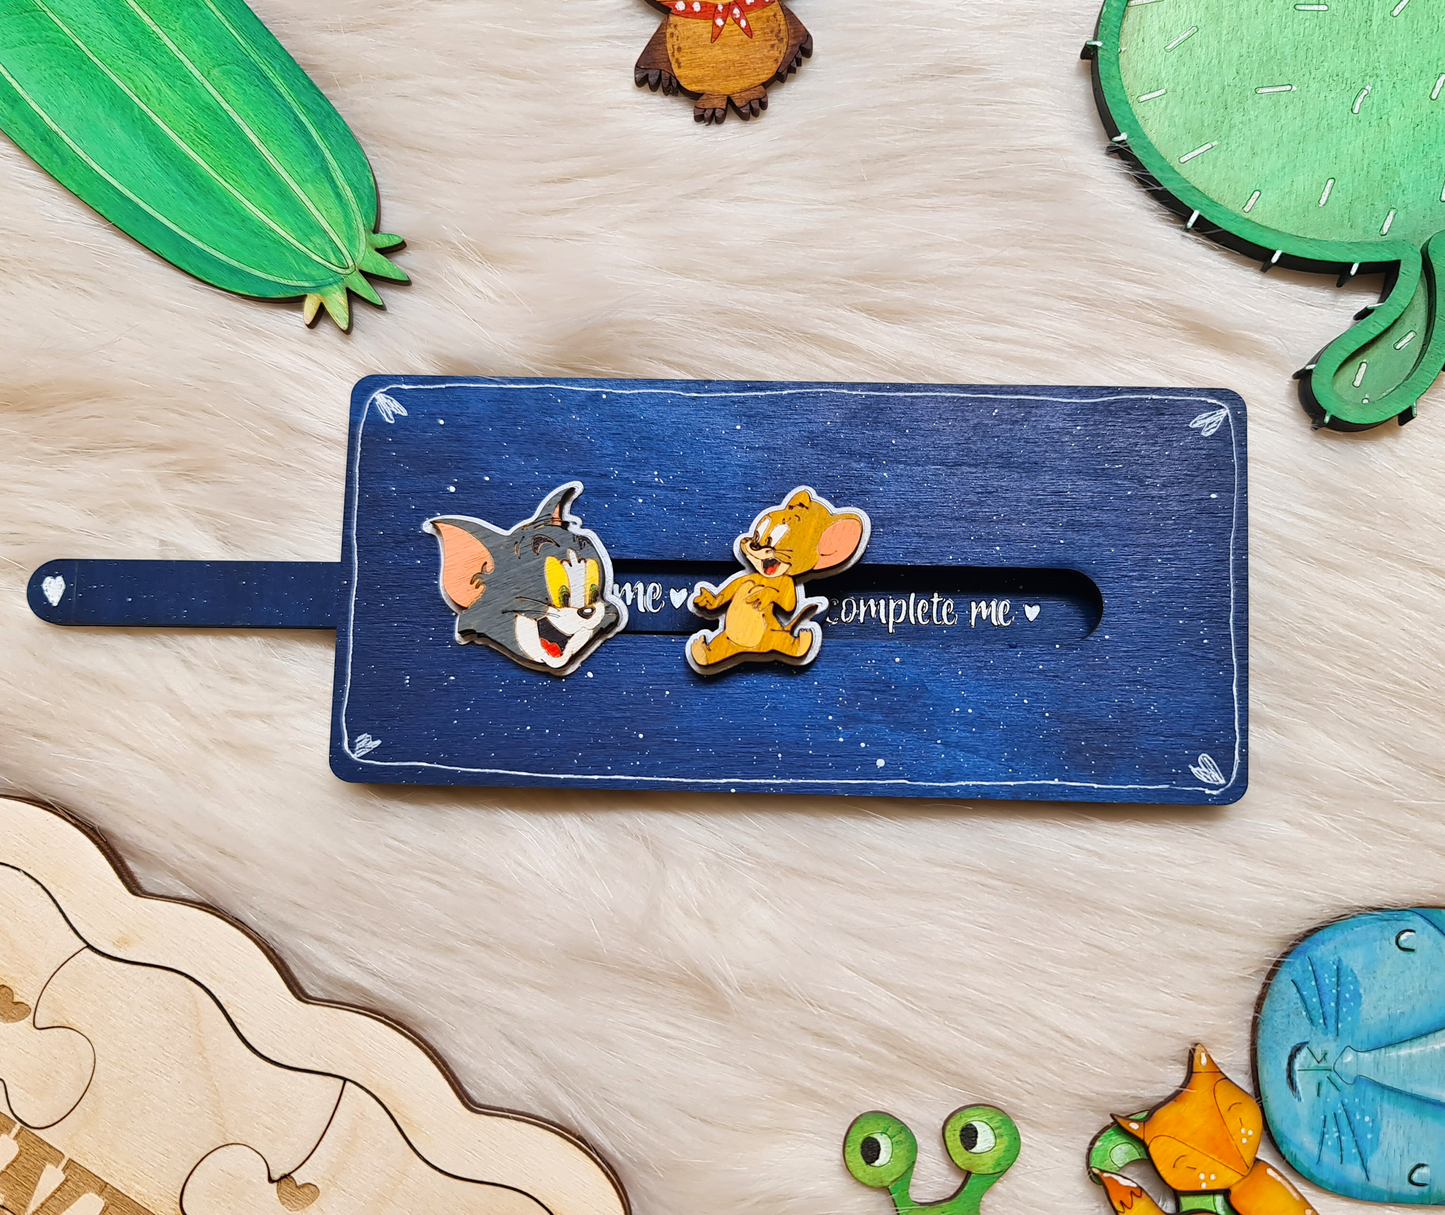 Swipe card "Tom & Jerry" Valentine's wooden message